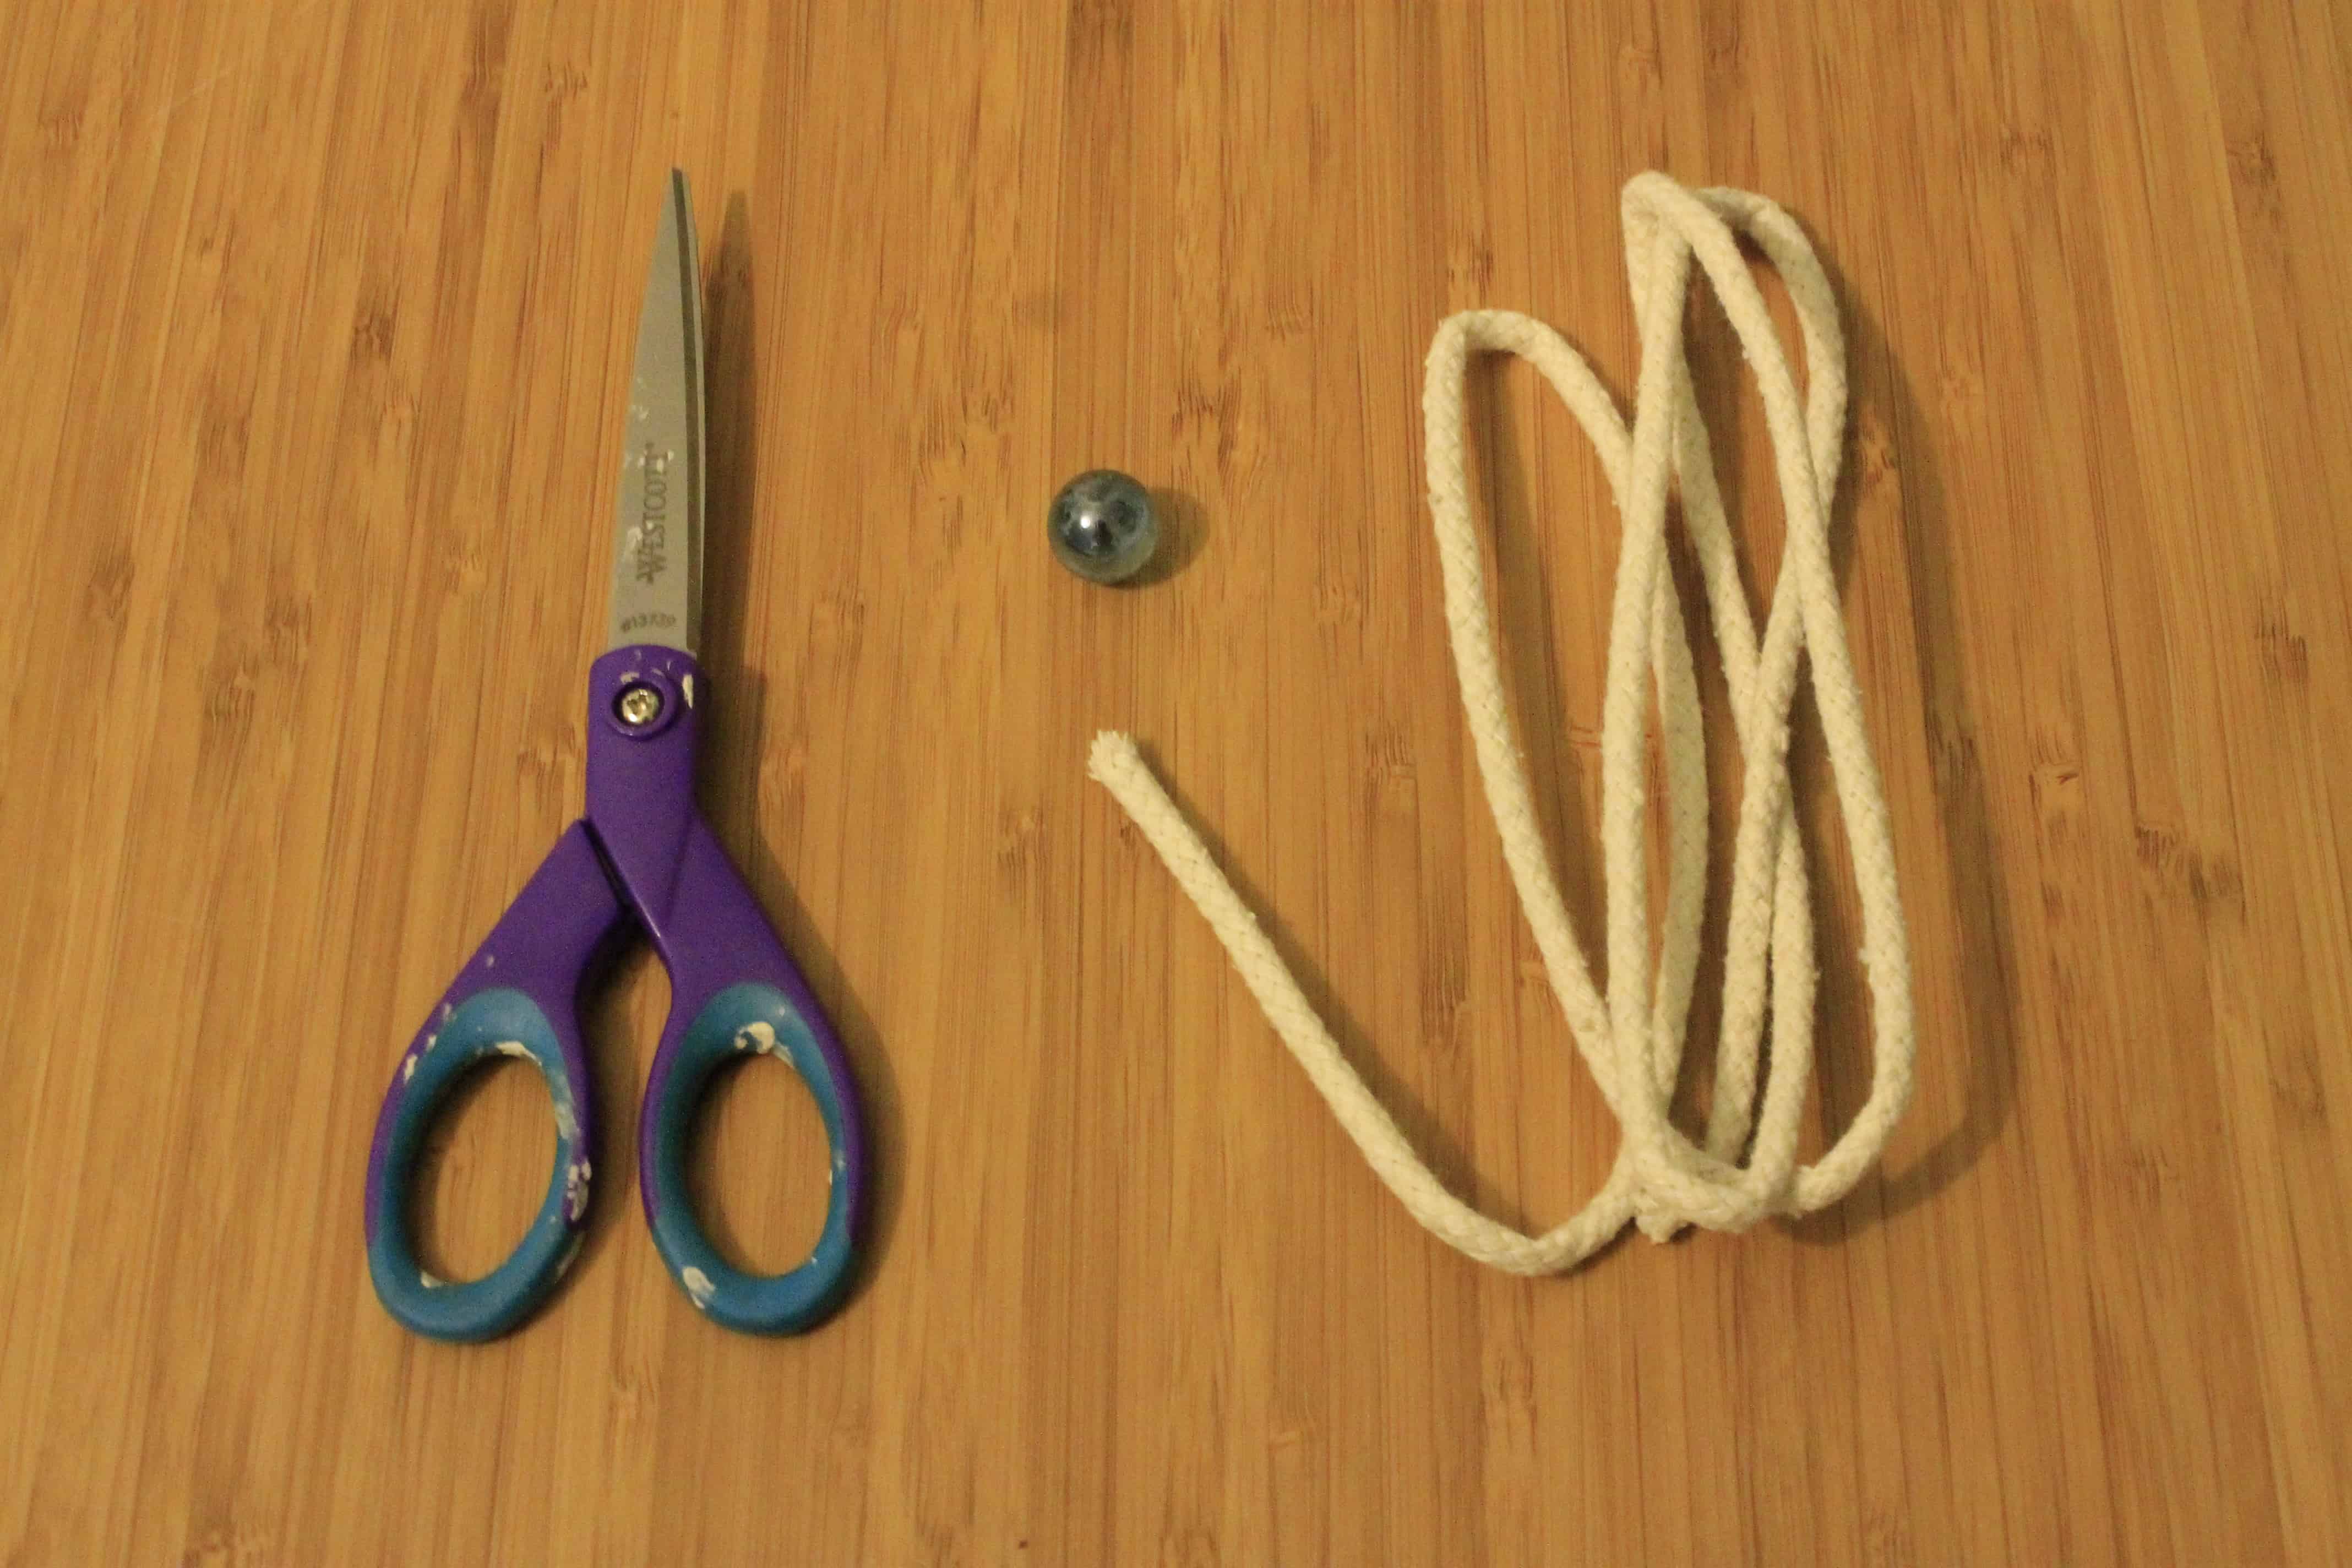 How to make Decorative Monkey Fist Knot Balls